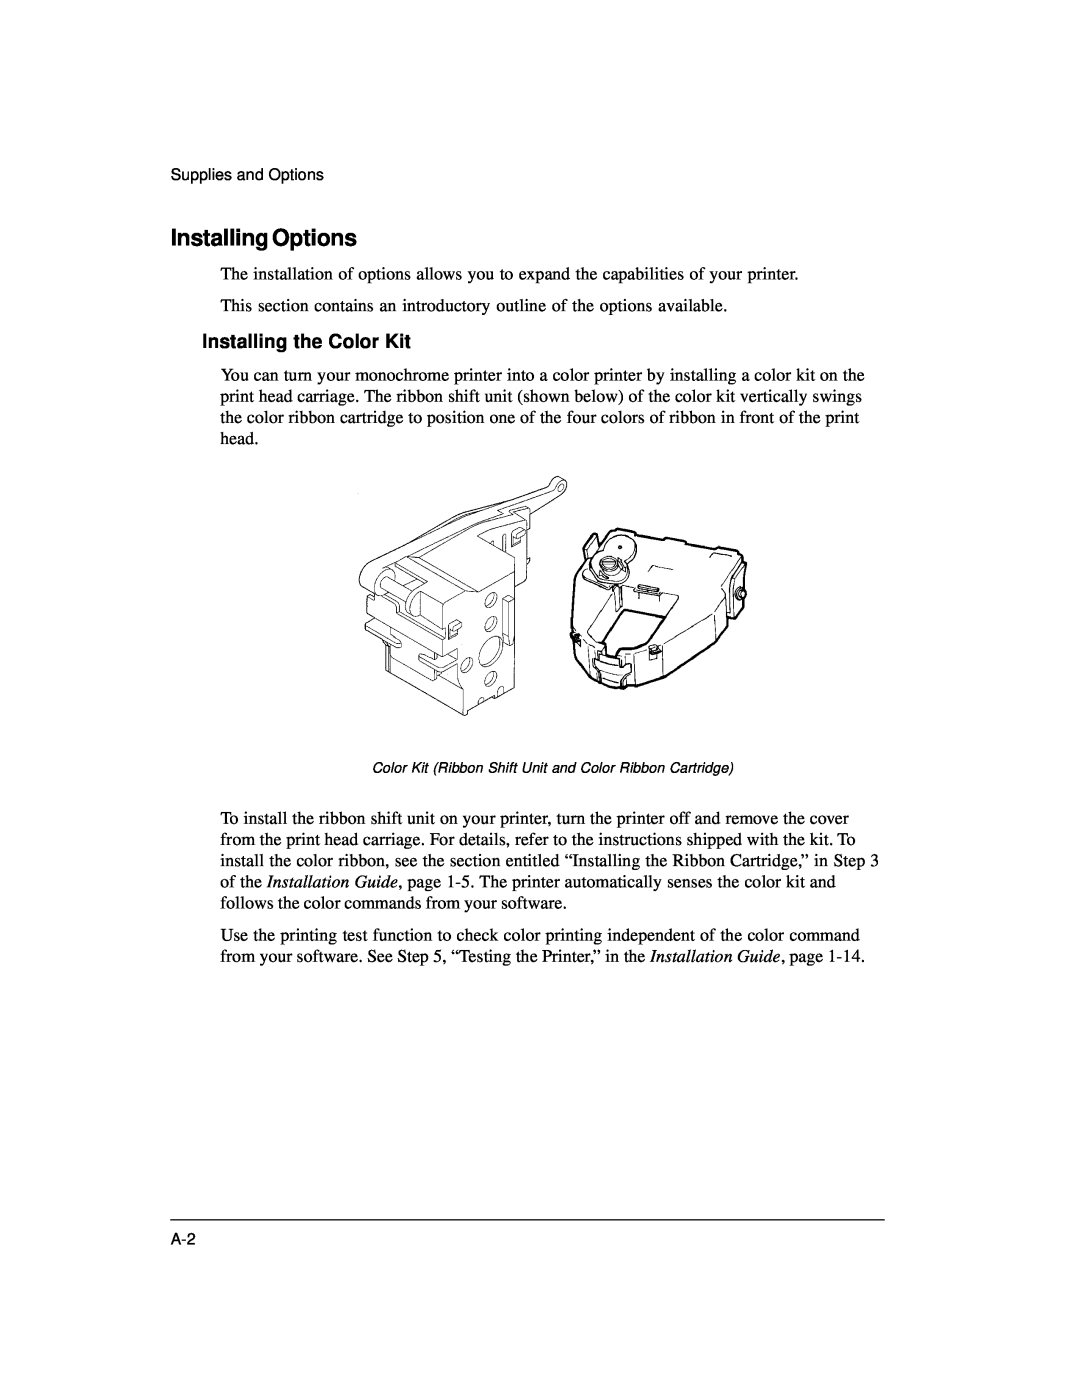 Genicom LA36 manual Installing Options, Installing the Color Kit 